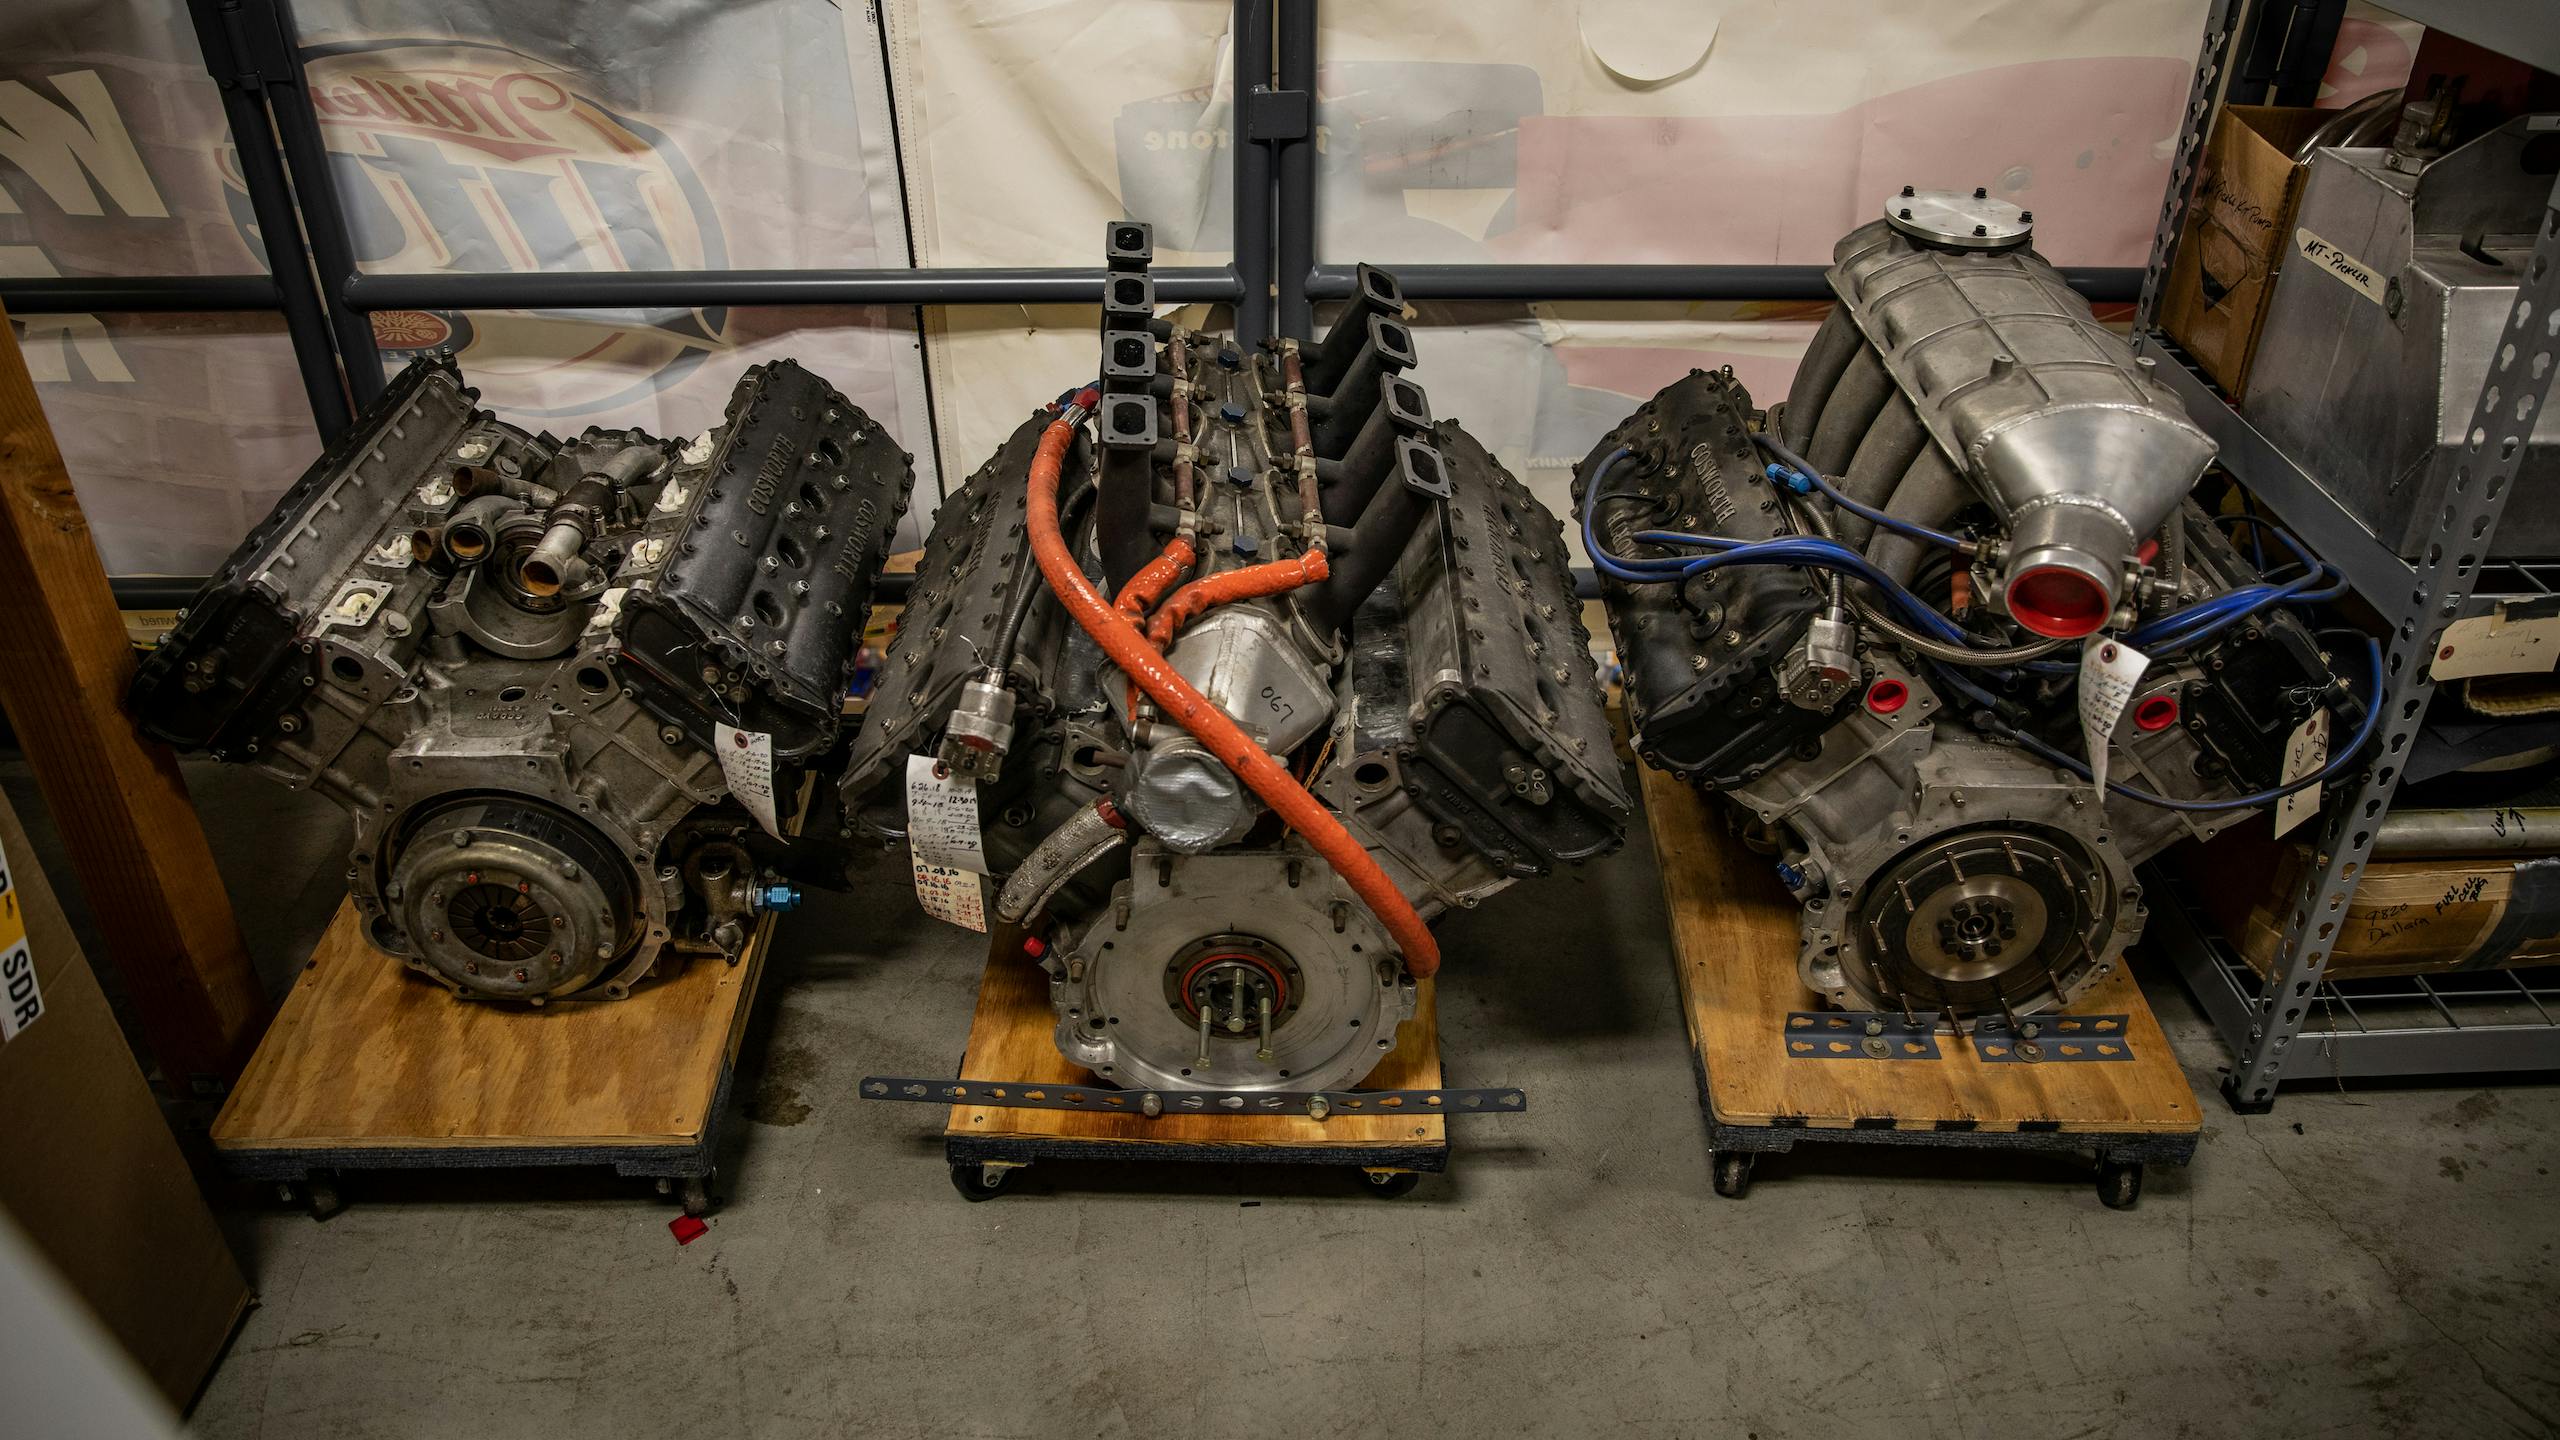 Turn 4 Restorations engines